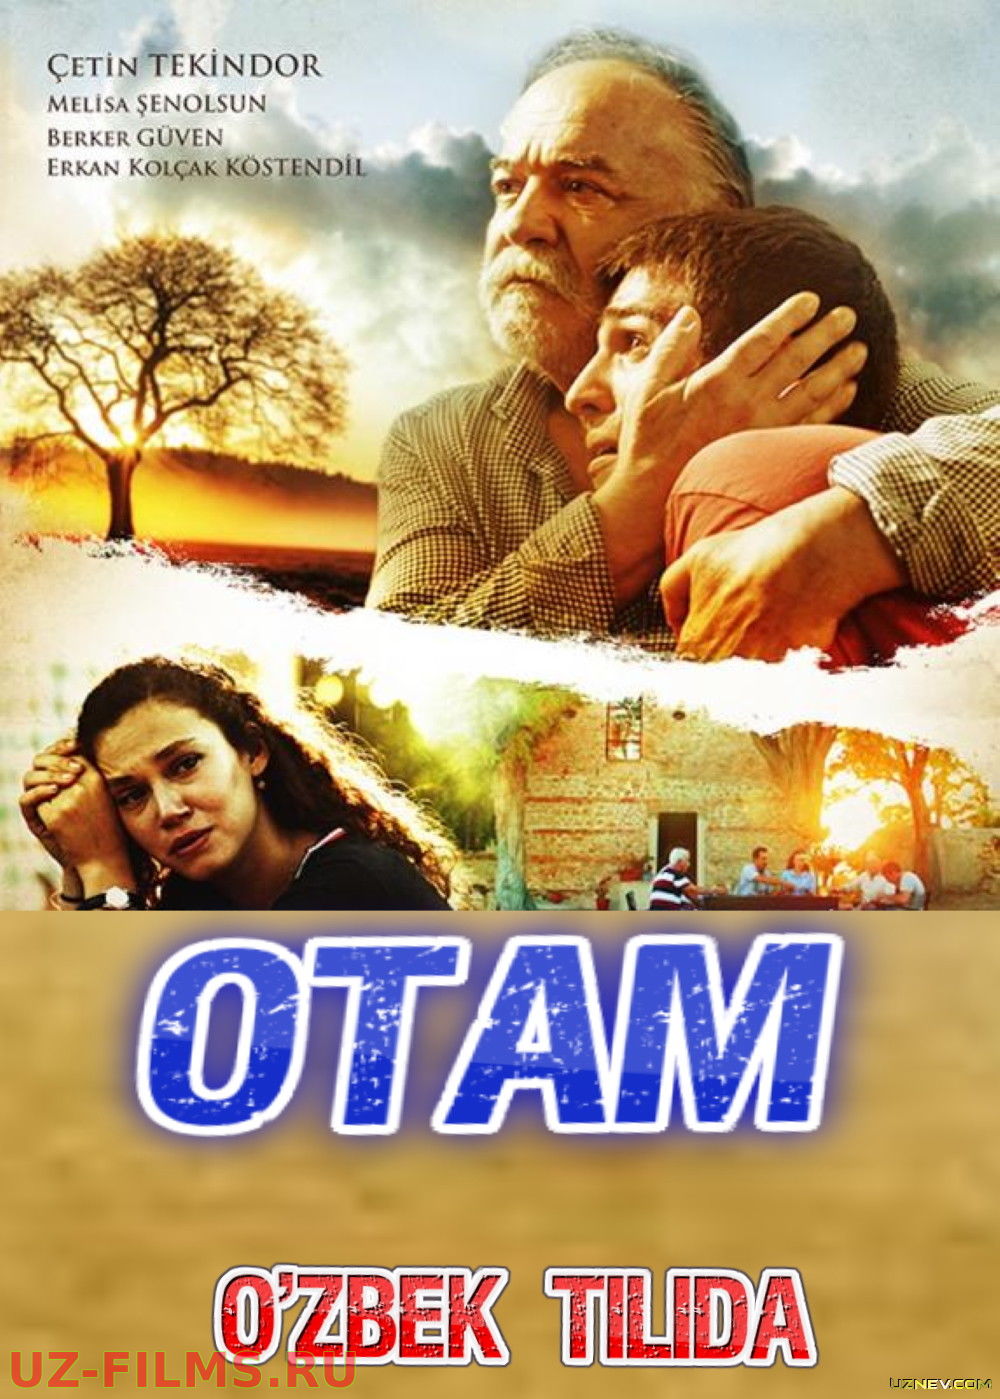 Otam Turk kino Uzbek tilida 2017